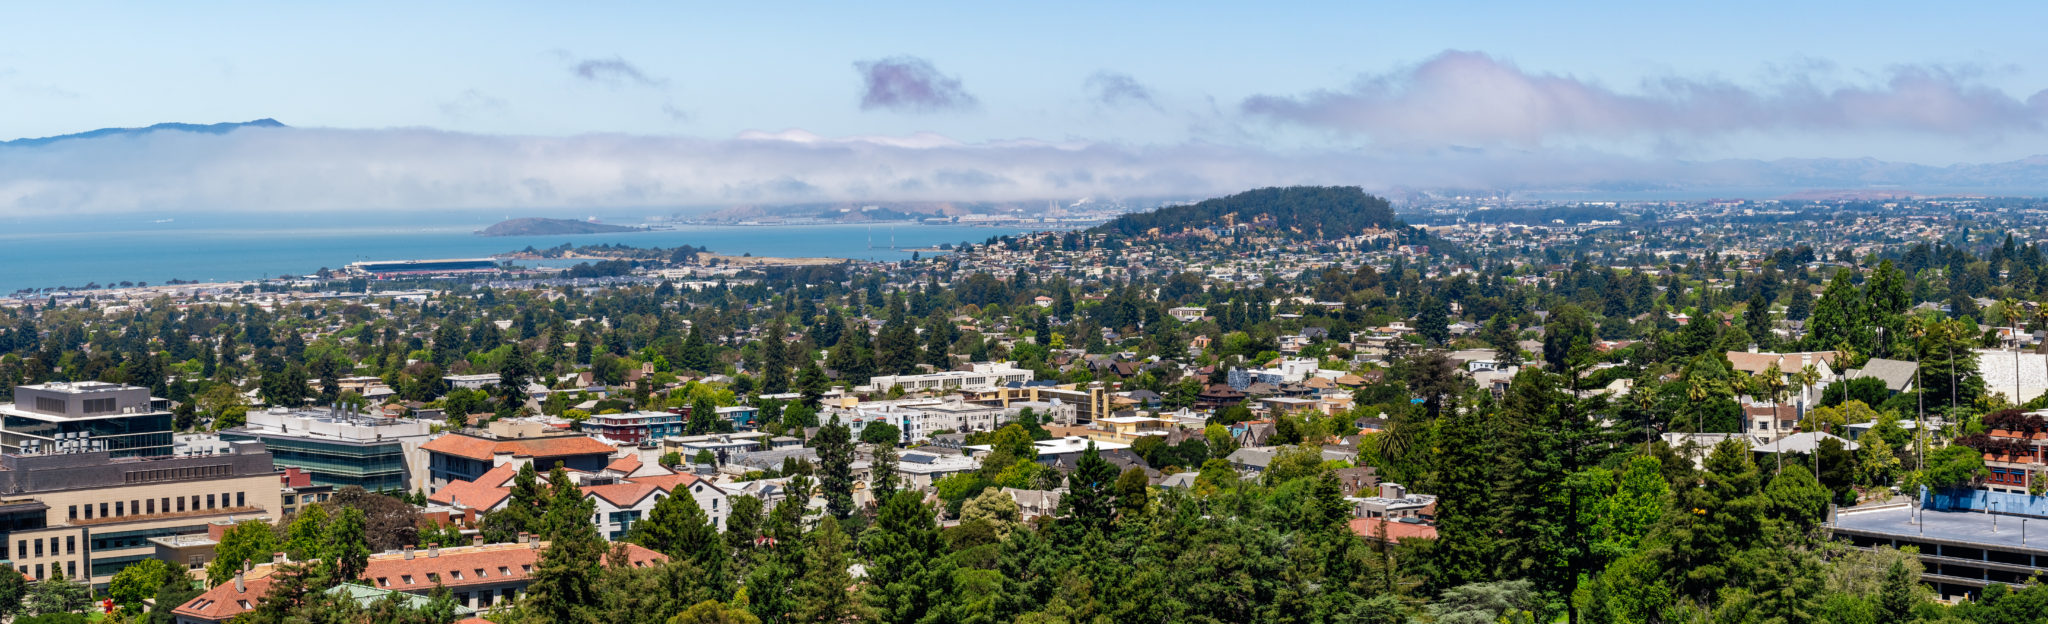 Berkeley California Bay City Skyline GIS